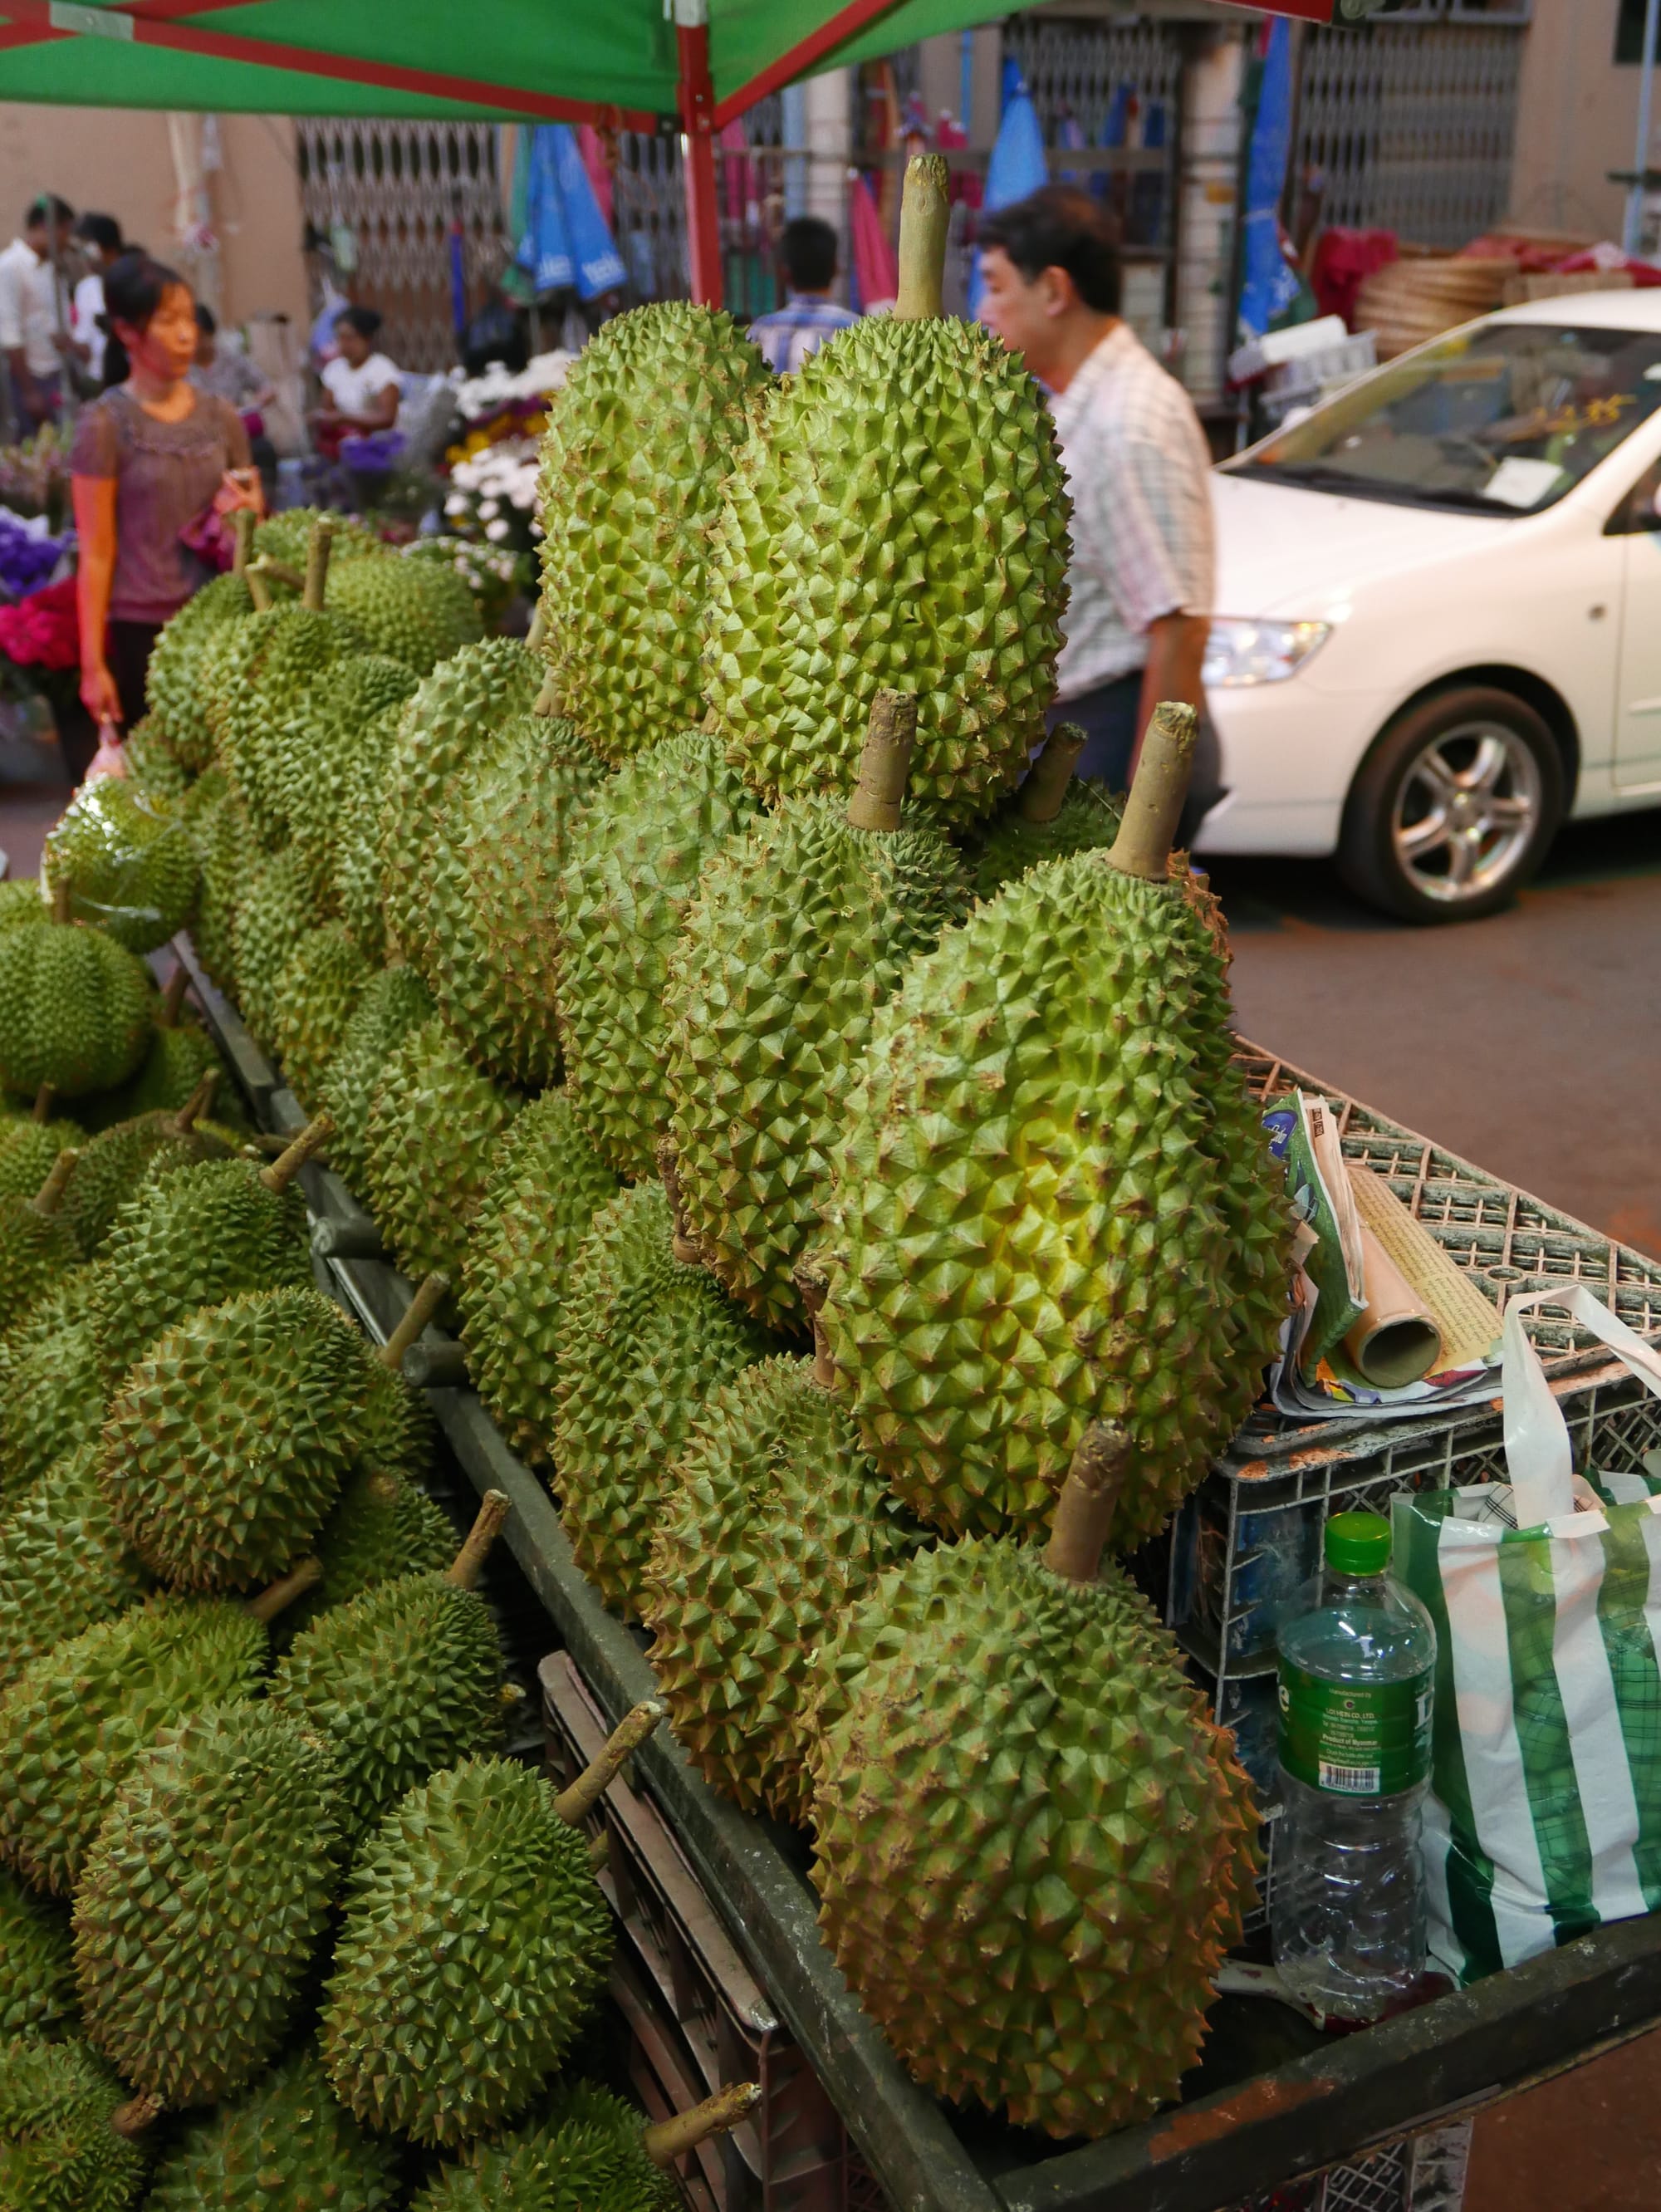 Photo by Author — durian on sale in Chinatown, Yangon (Rangoon), Myanmar (Burma)